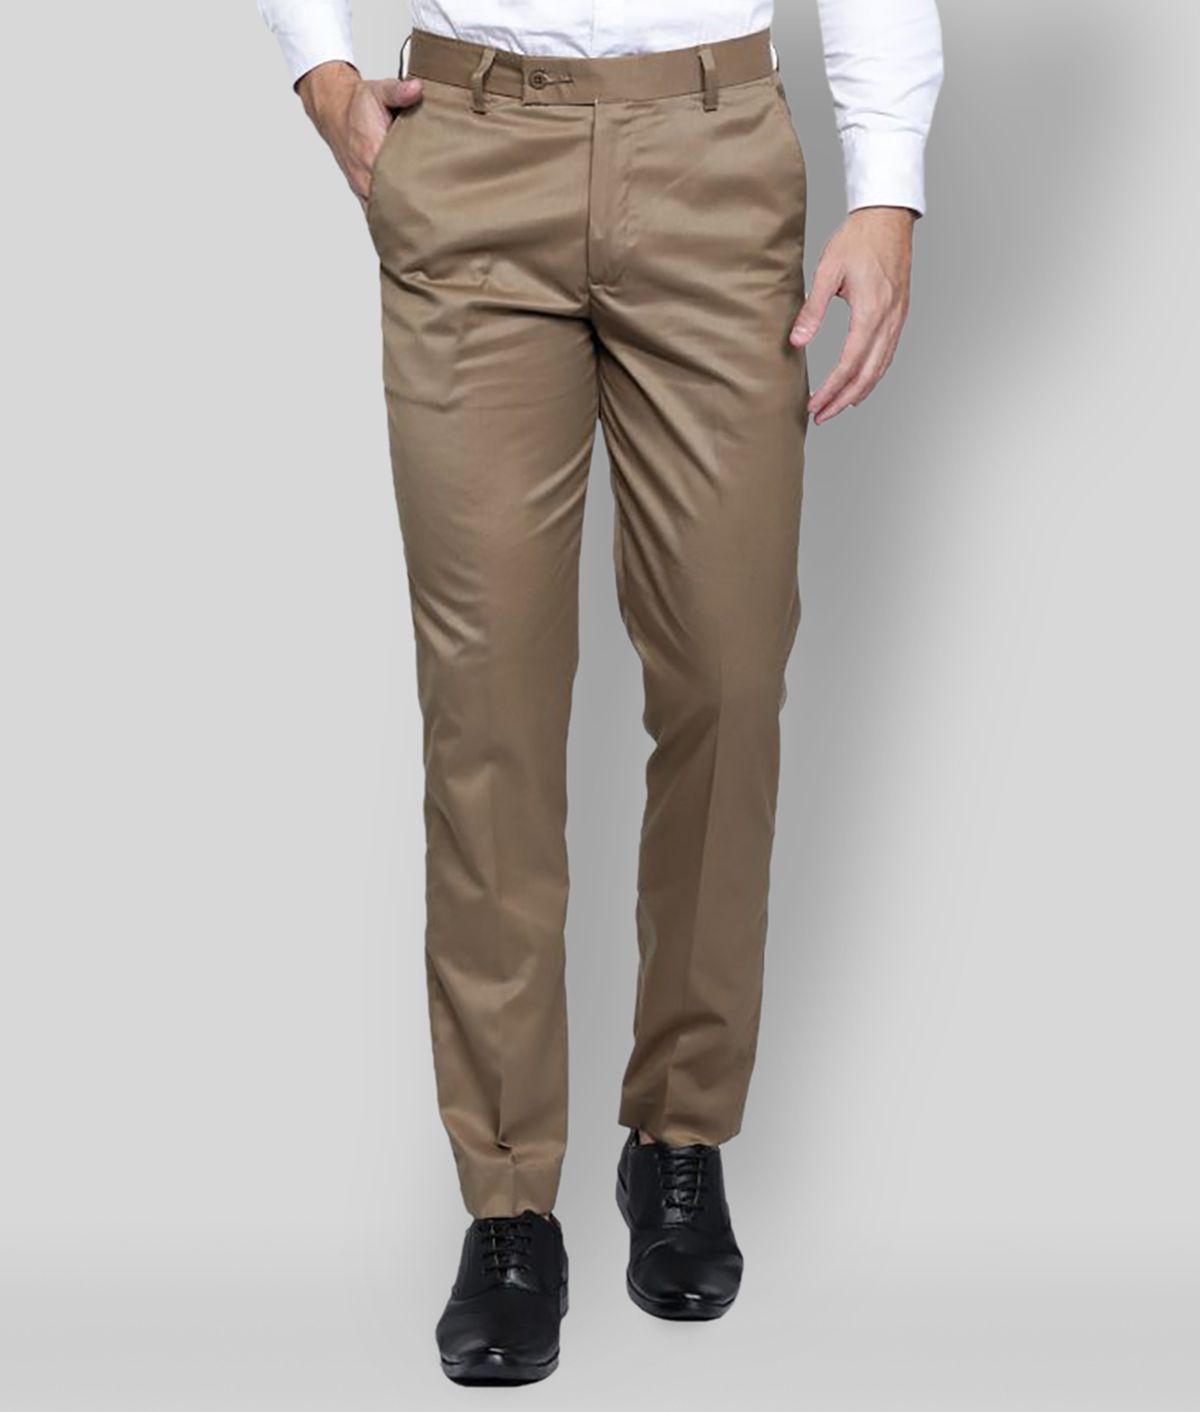     			Haul Chic - Brown Cotton Blend Slim Fit Men's Formal Pants (Pack of 1)